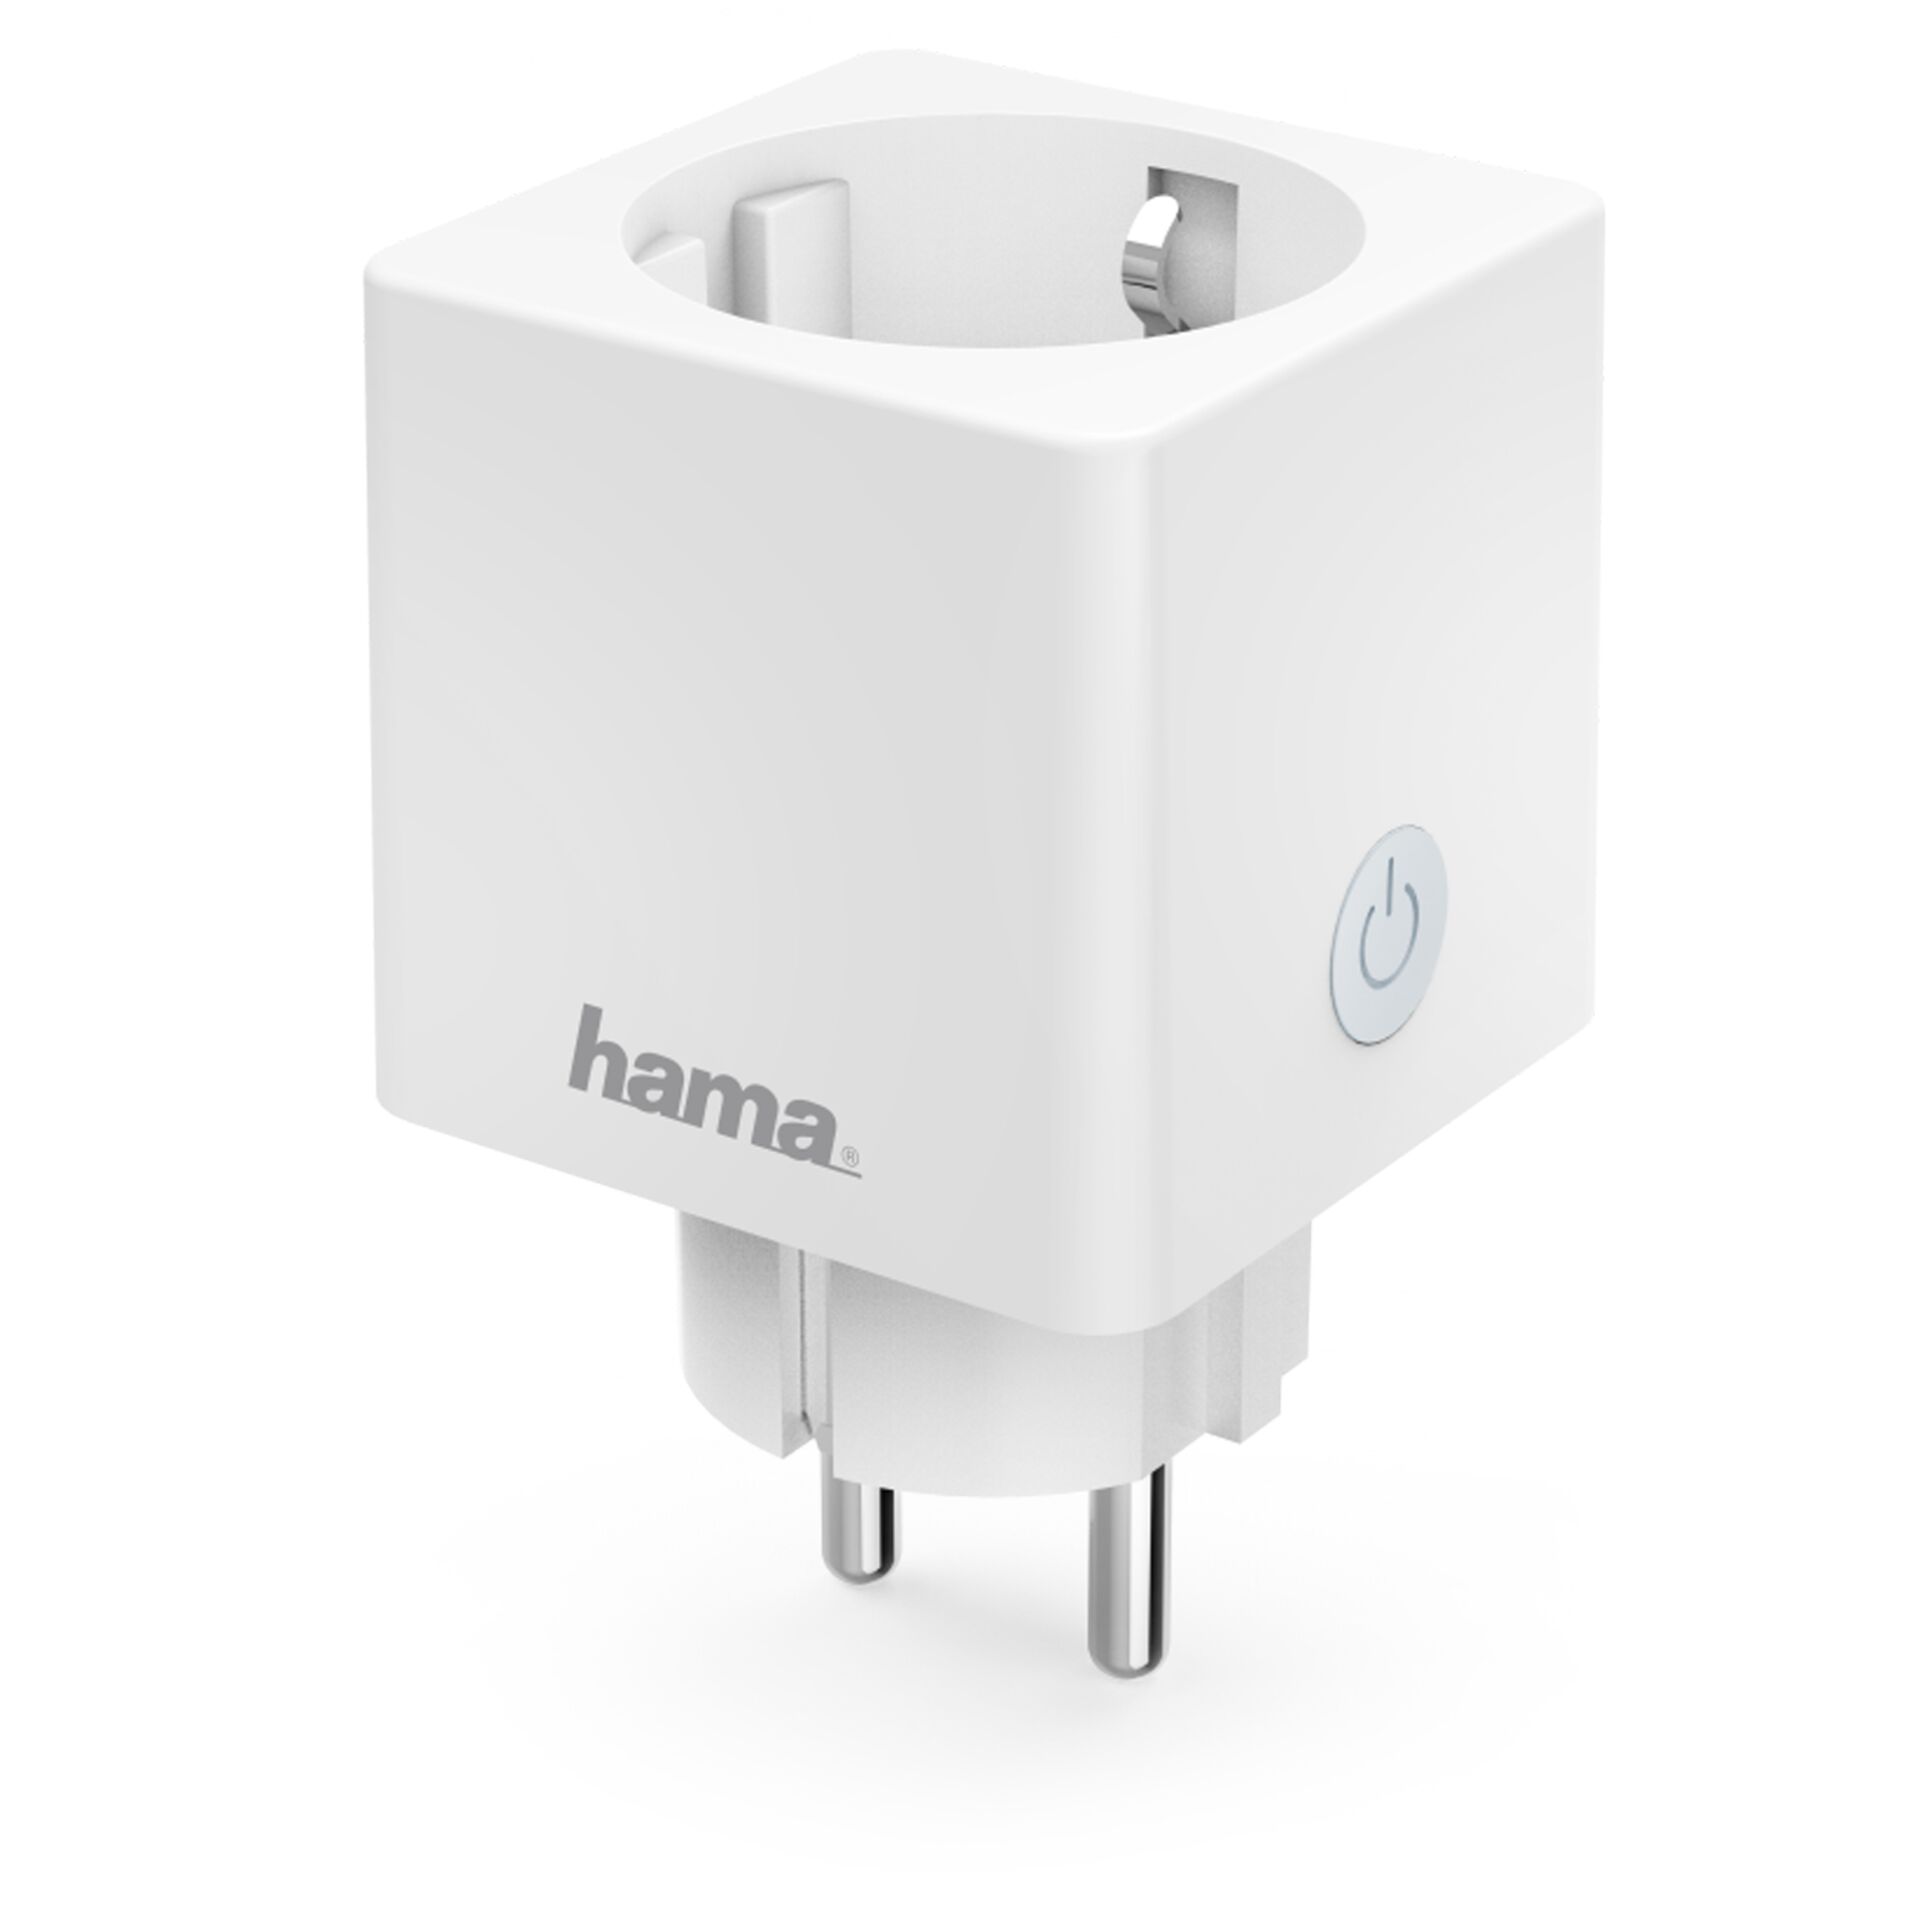 Hama WLAN-Socket Mini Consumption Measurer w/o Hub